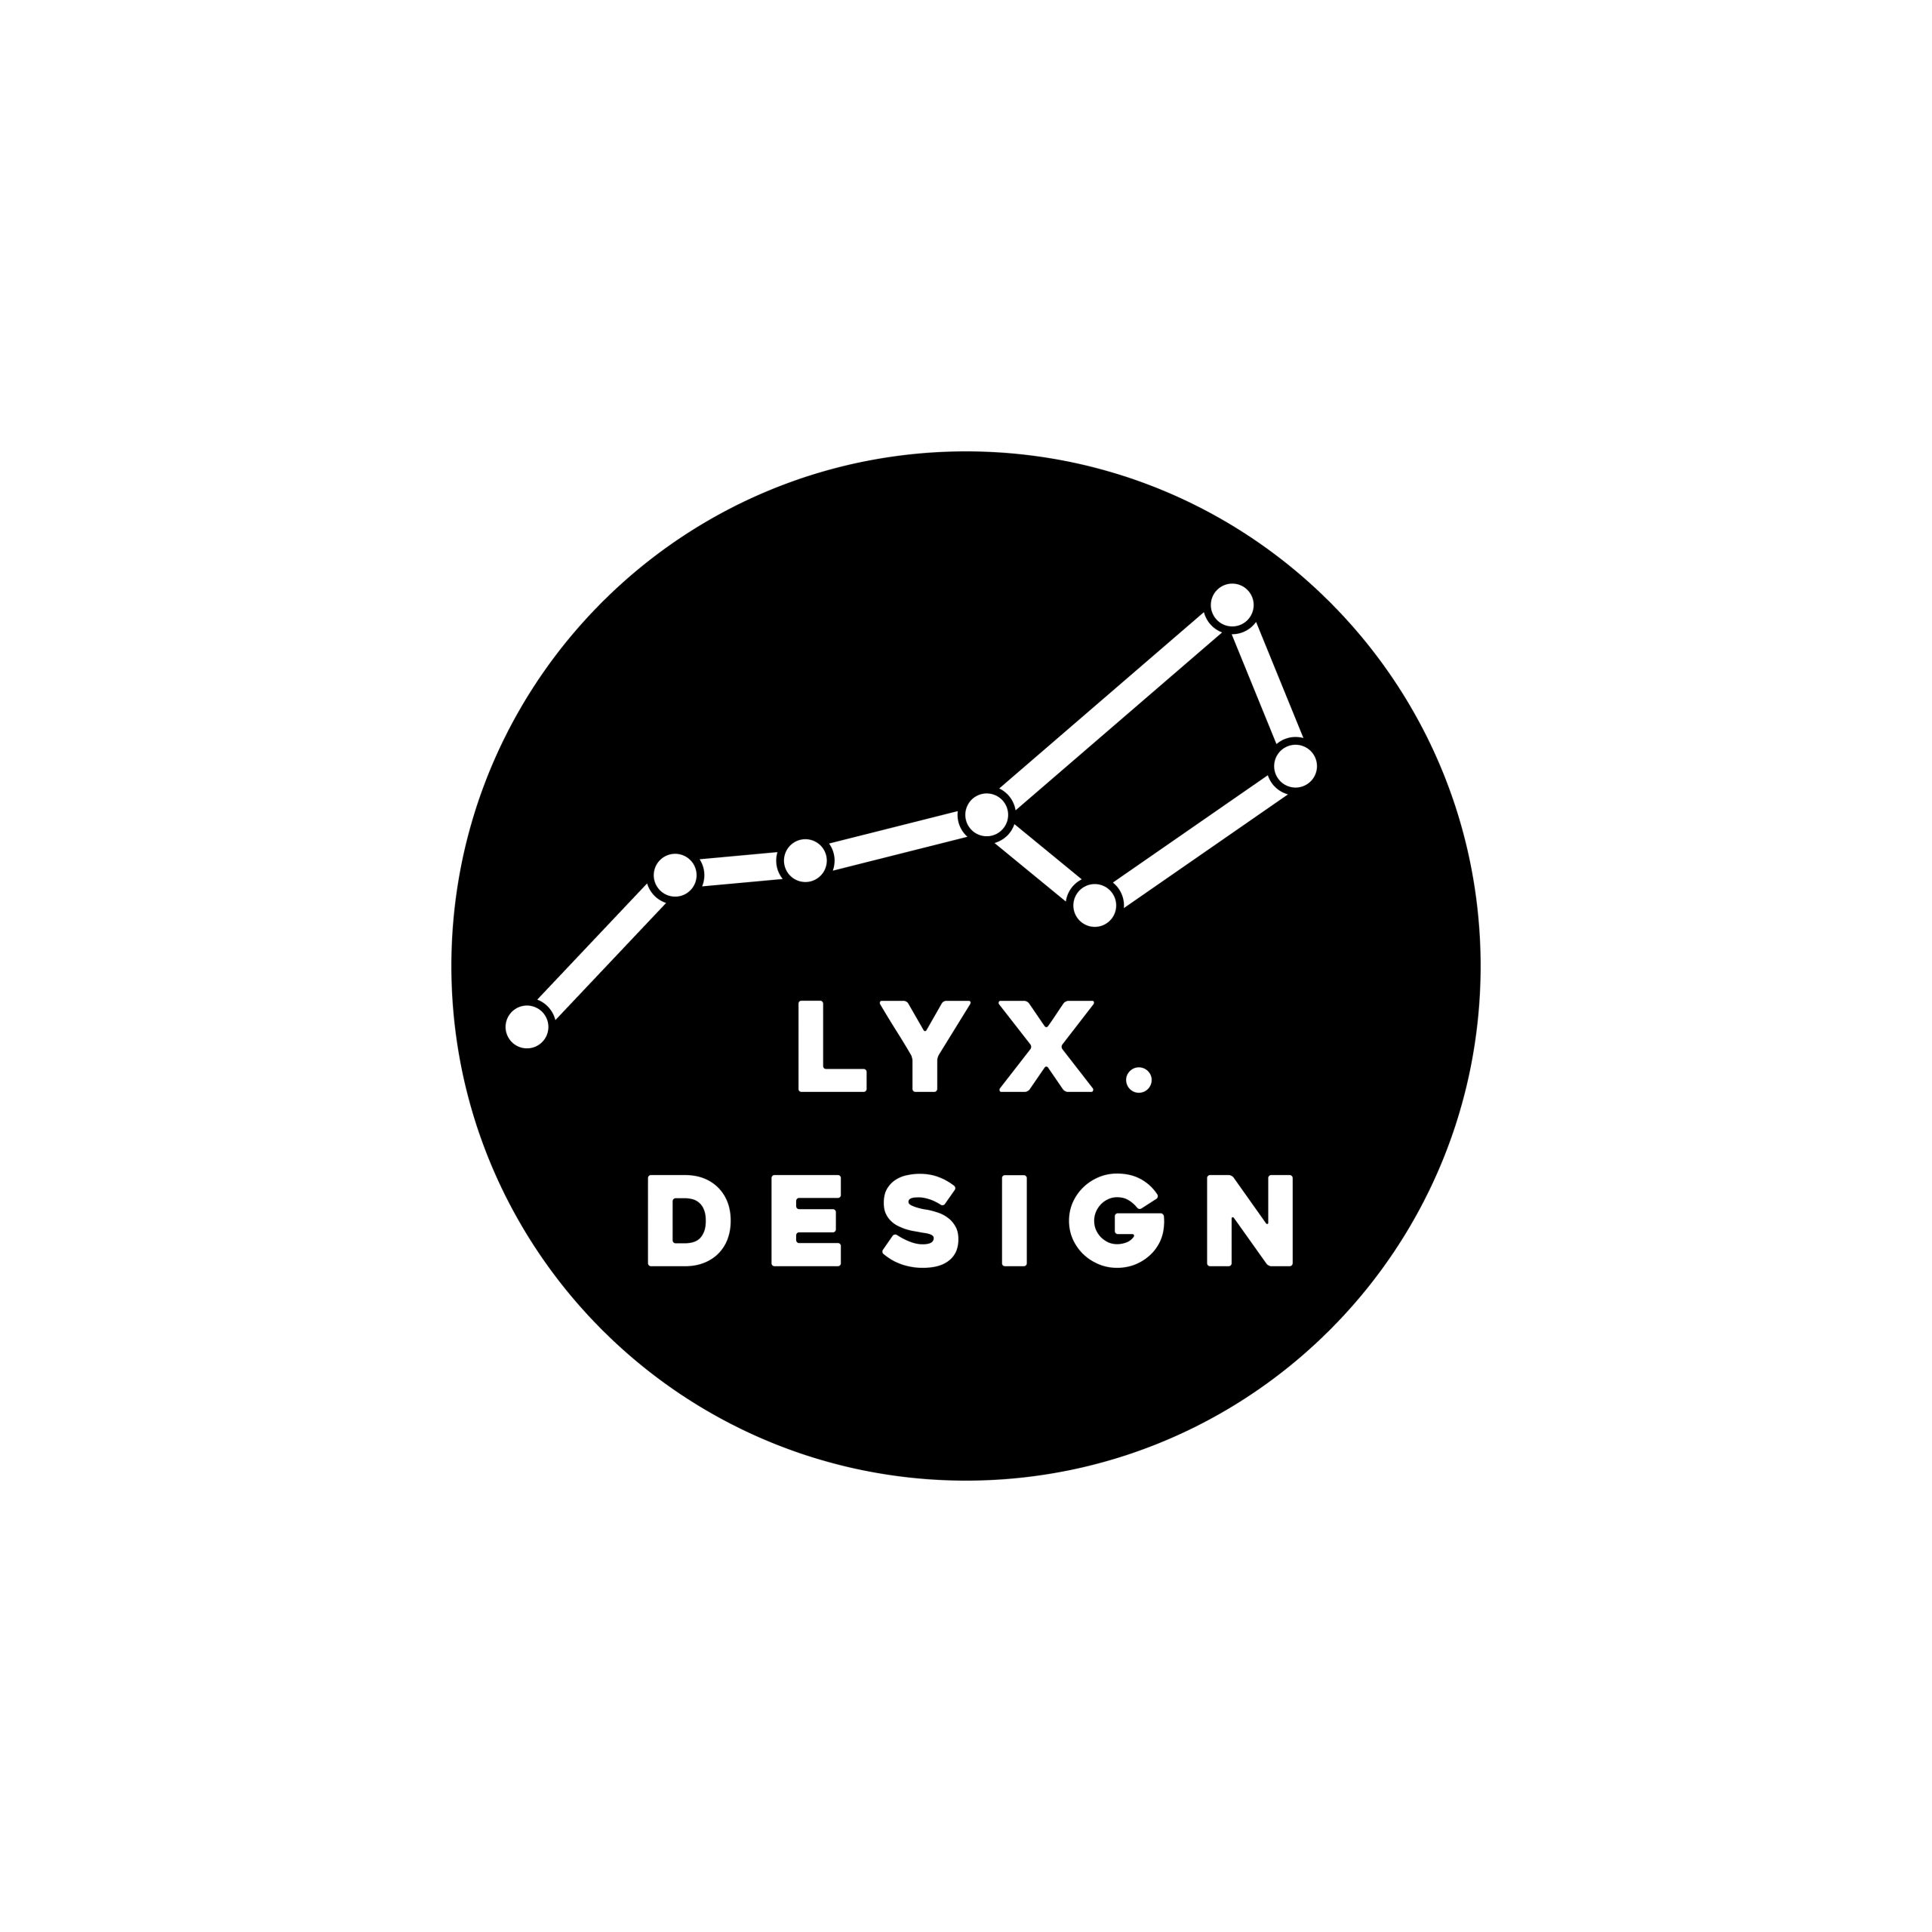 lyx.design